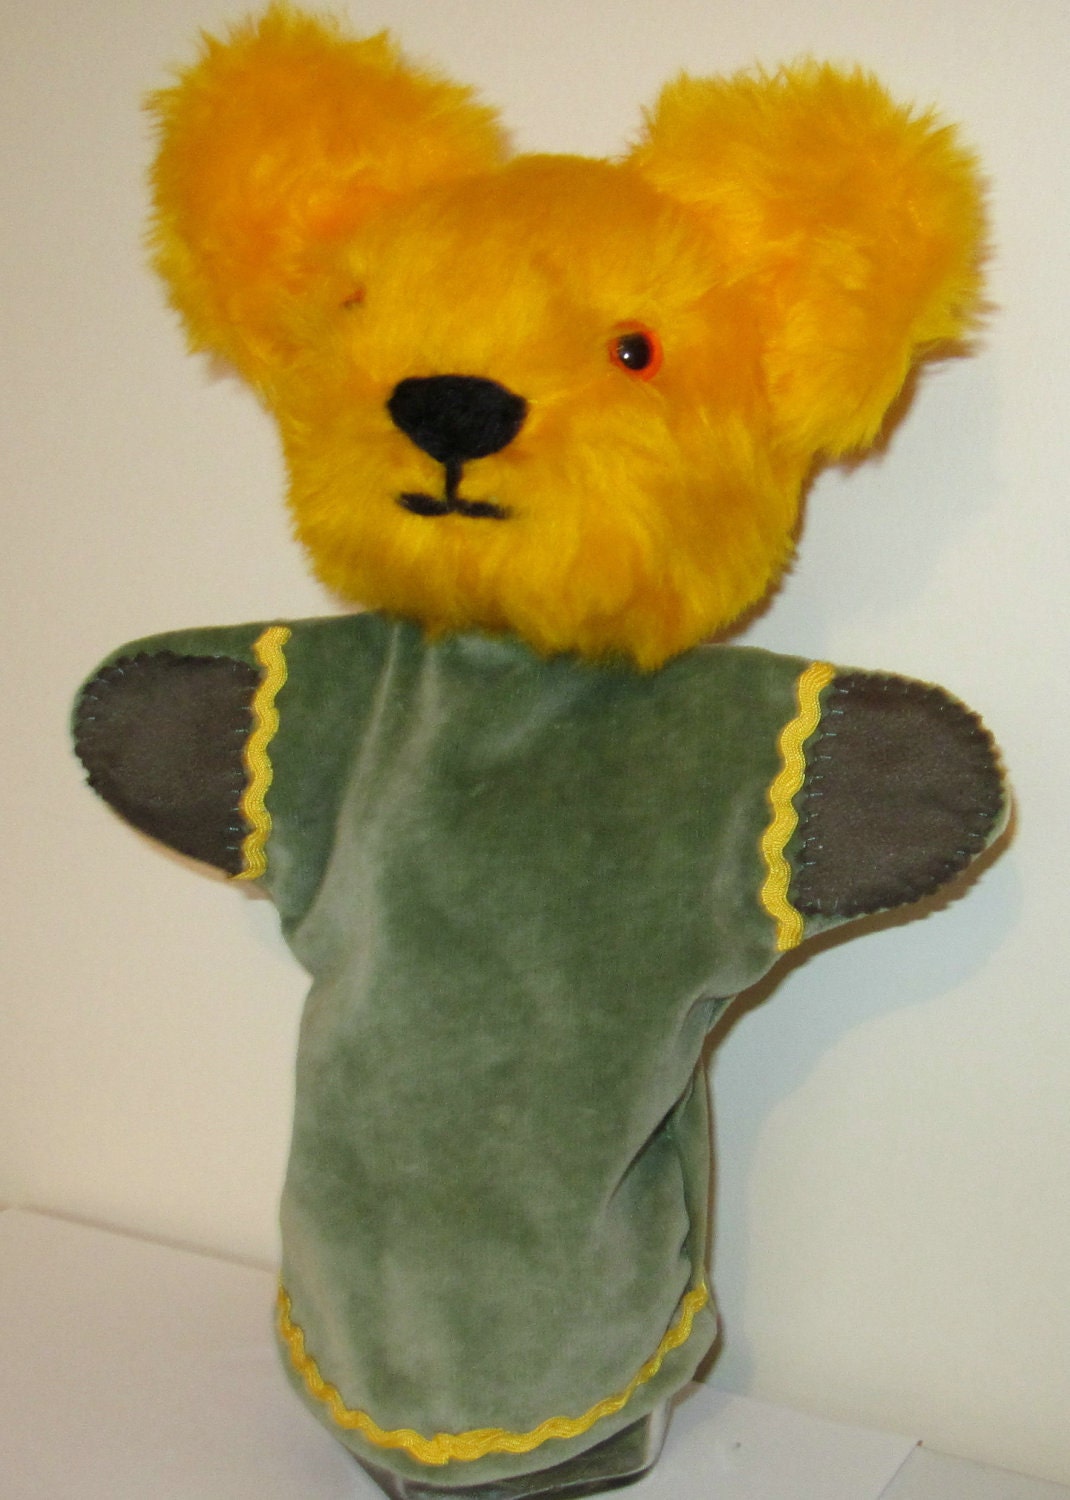 OAAK Green Velvet Glove Puppet with Golden Bear Plush Head Handmade in the UK - coldhamcuddlies